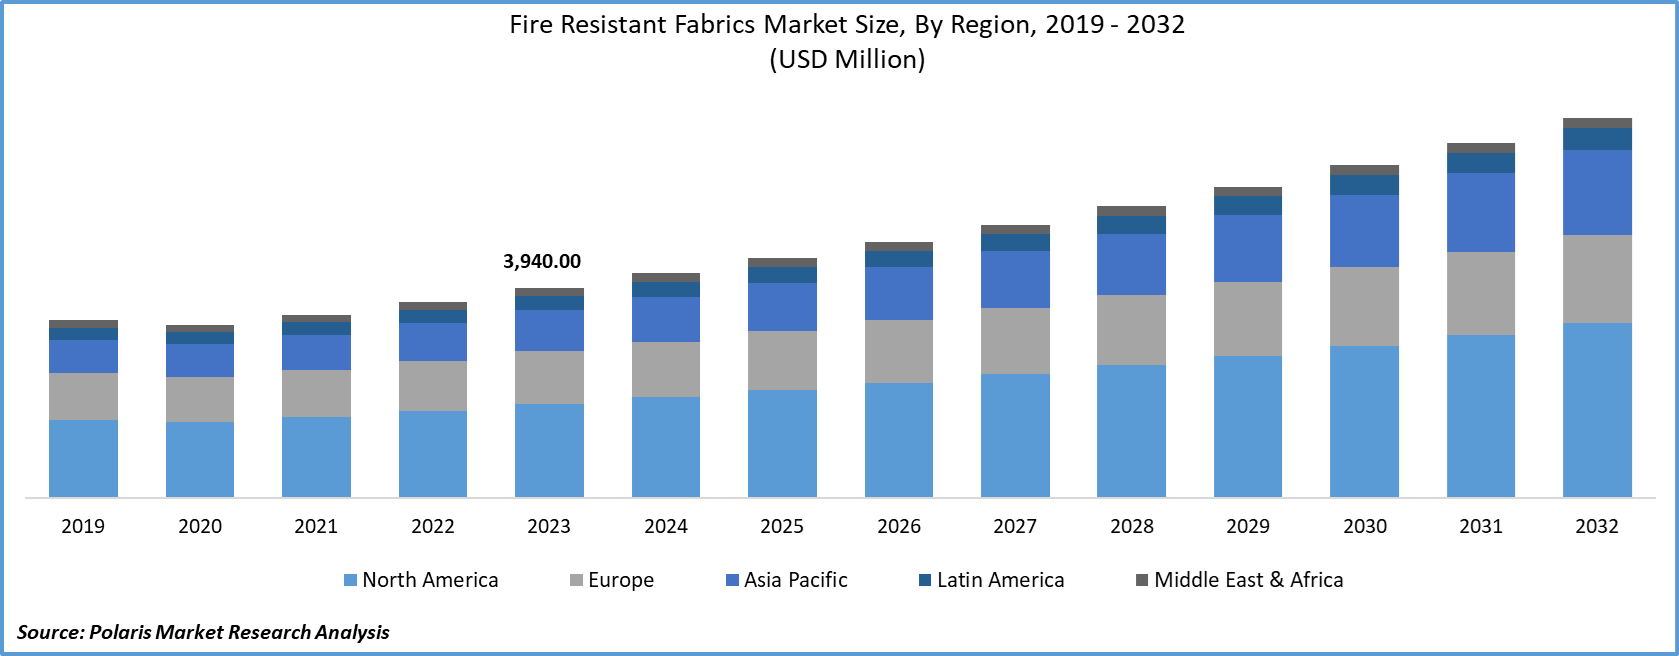 Fire Resistant Fabrics Market Size